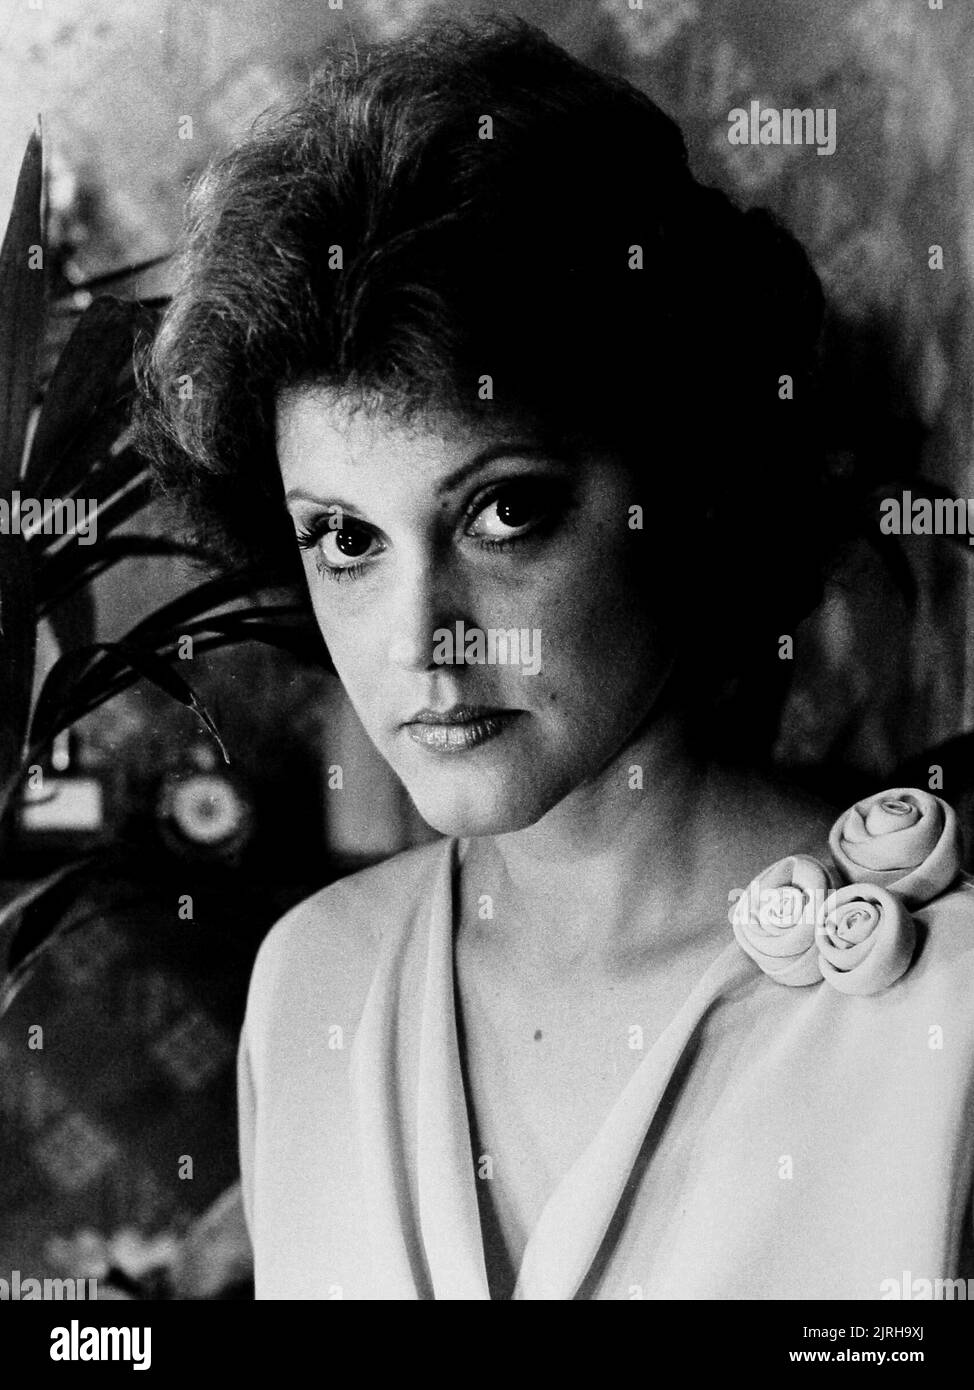 LISE HILBOLDT, A MARRIED MAN, 1983 Stock Photo - Alamy